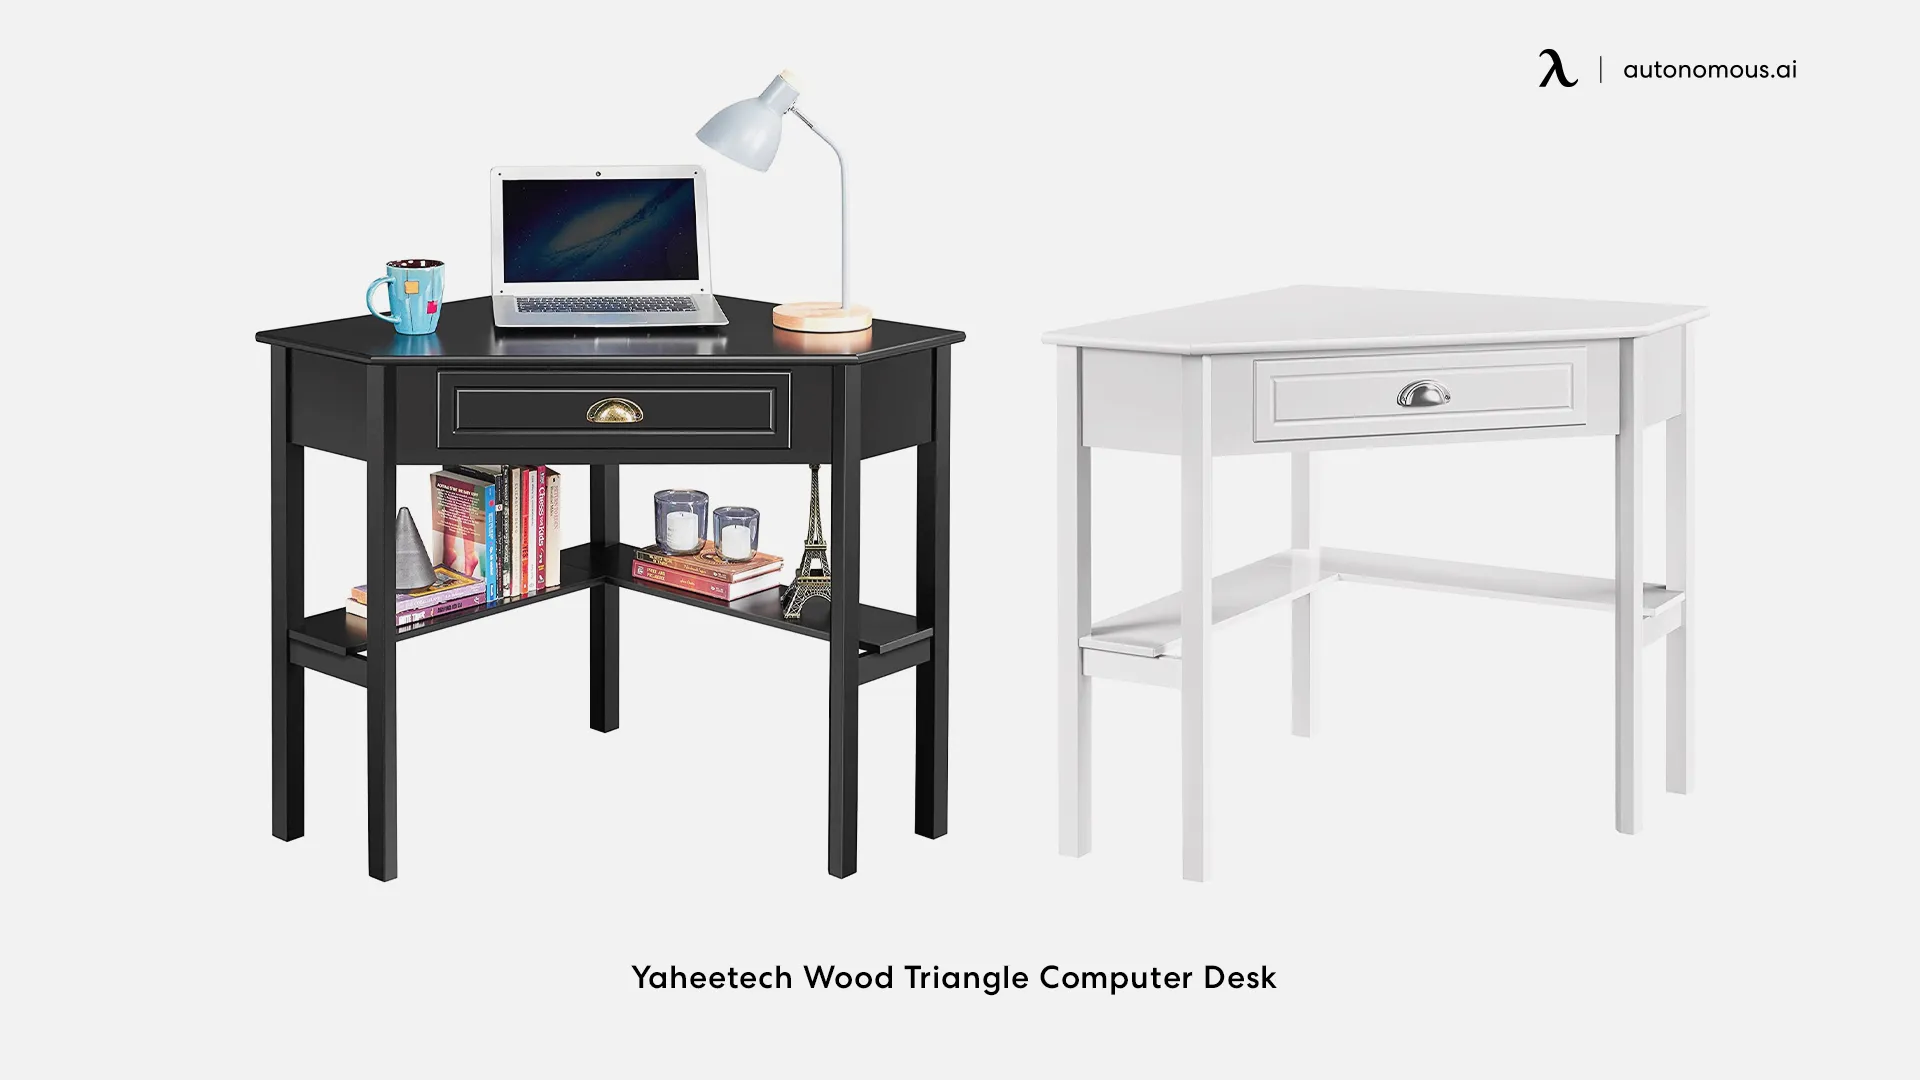 Yaheetech Wood Triangle Computer Desk